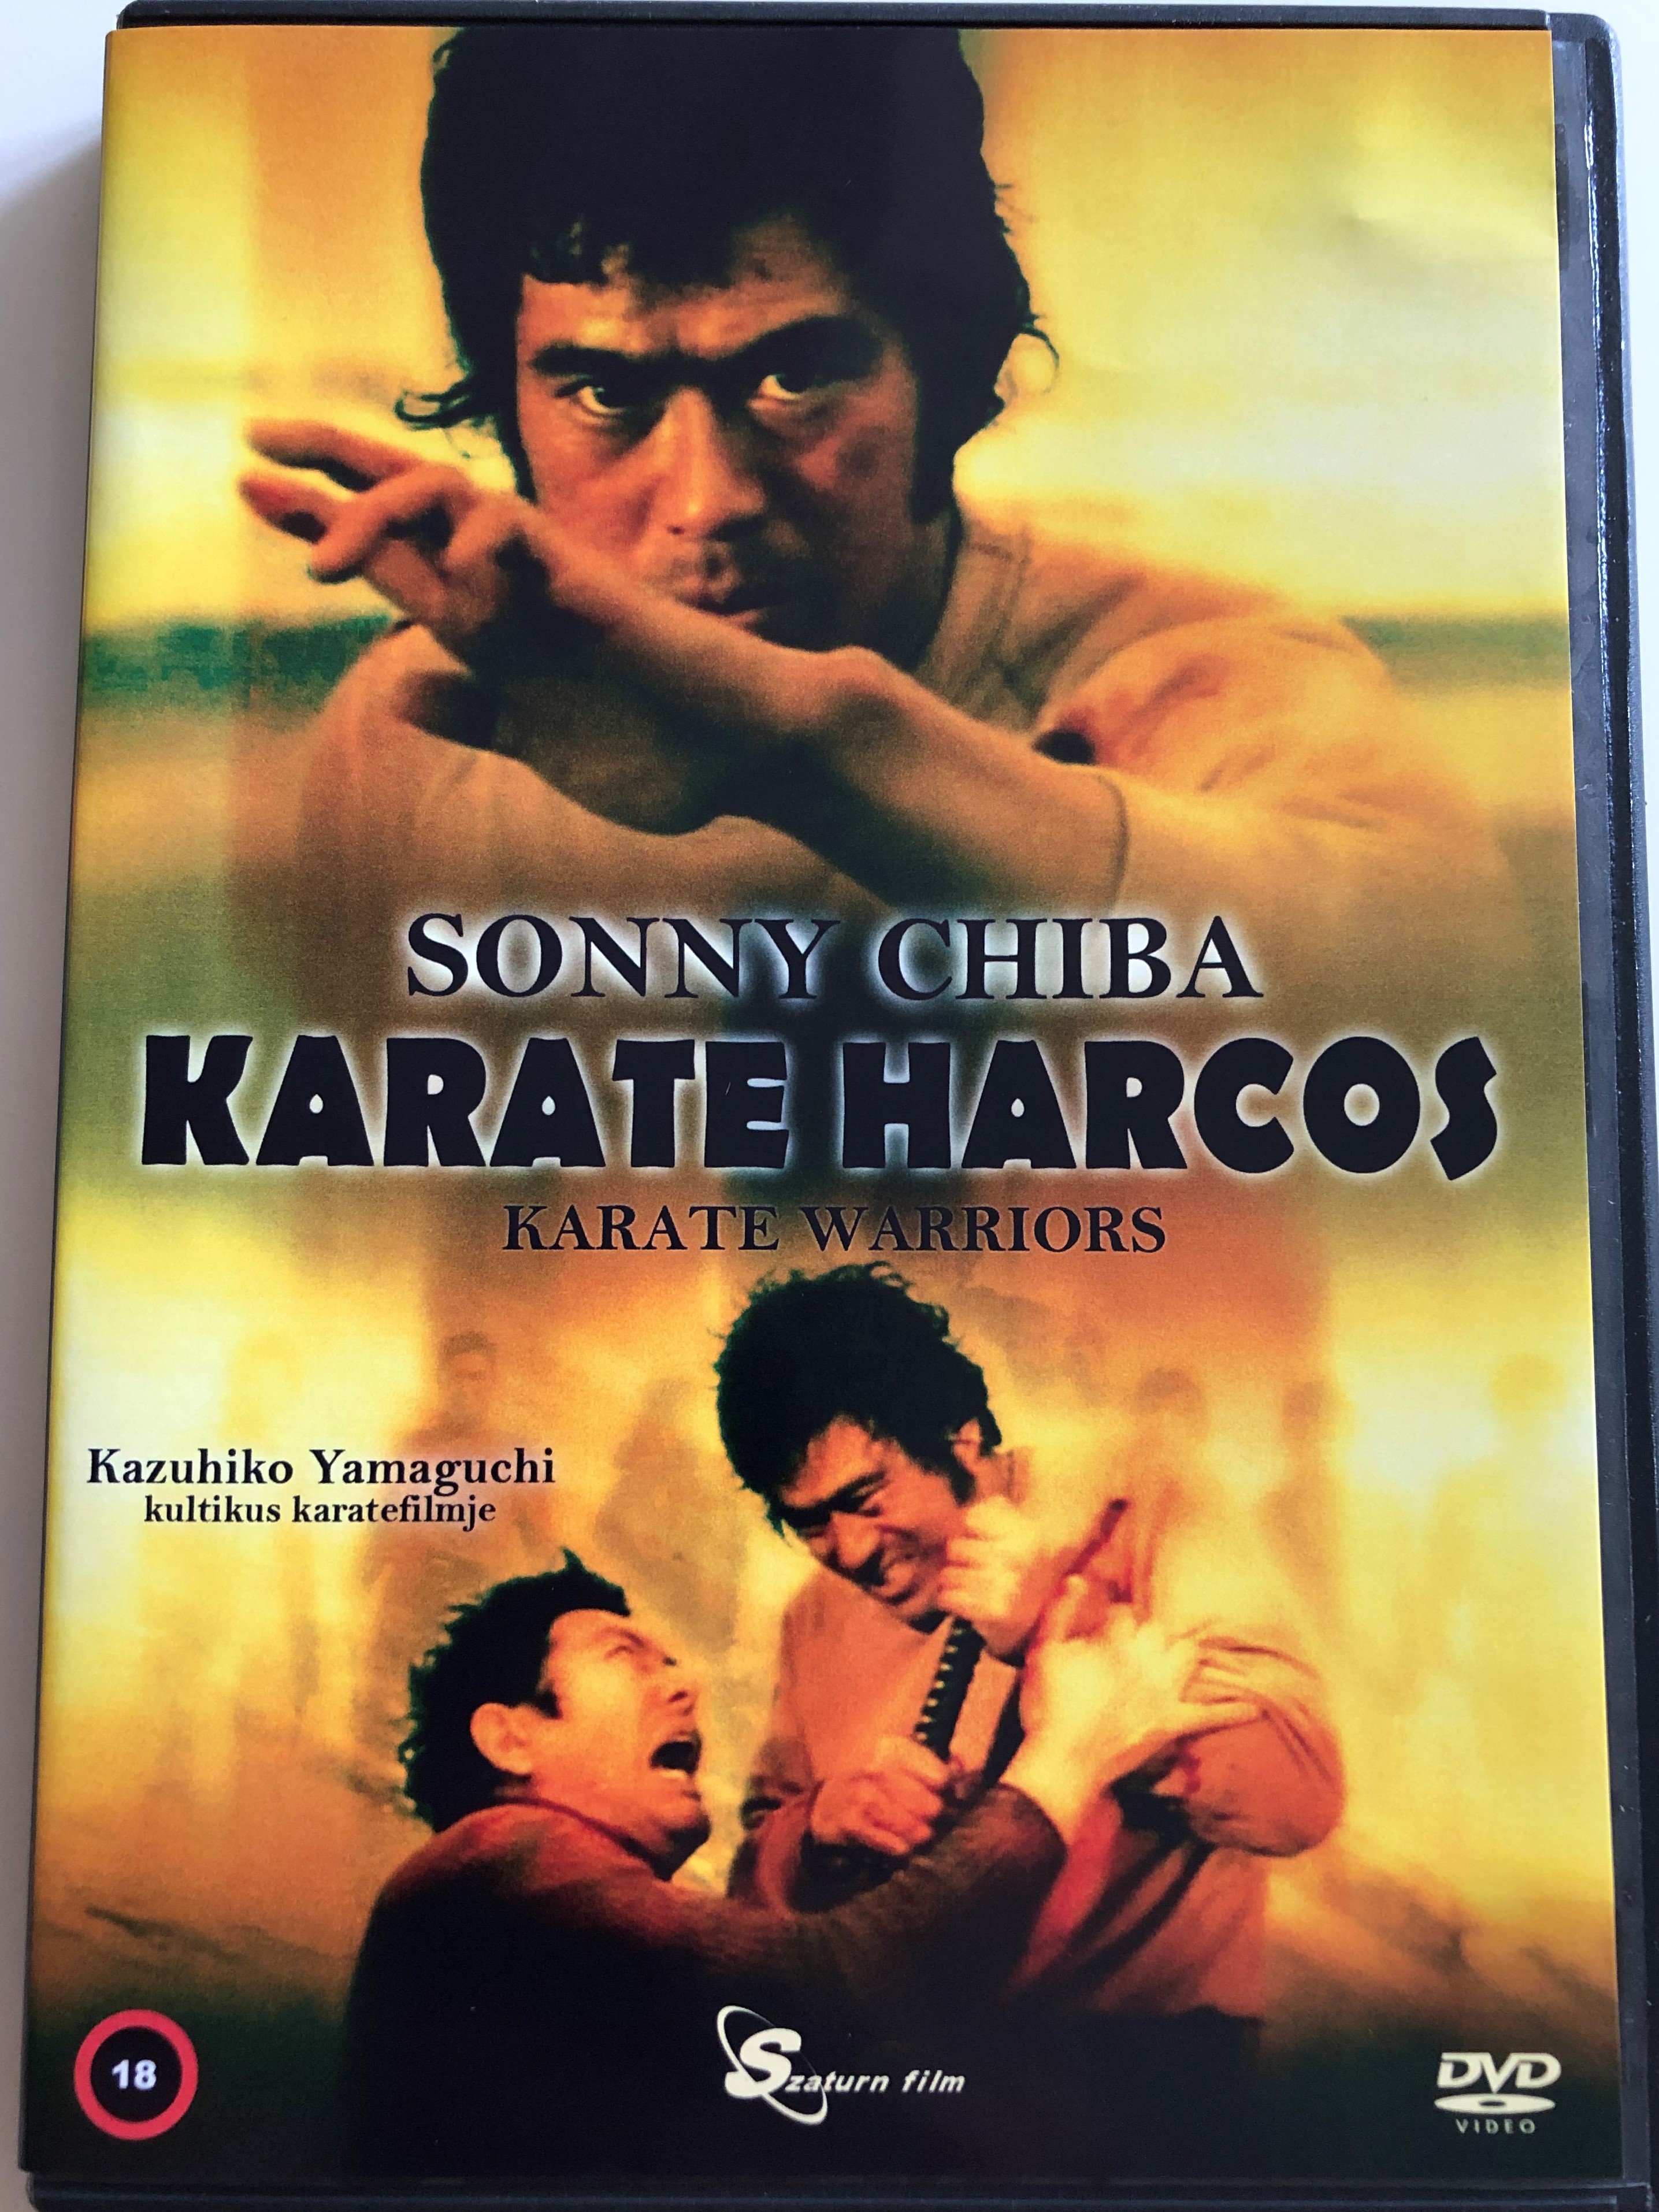 karate-warriors-dvd-1976-karate-harcos-directed-by-kazuhiko-yamaguchi-starring-sonny-chiba-isao-natsuyagi-akiko-koyama-1-.jpg